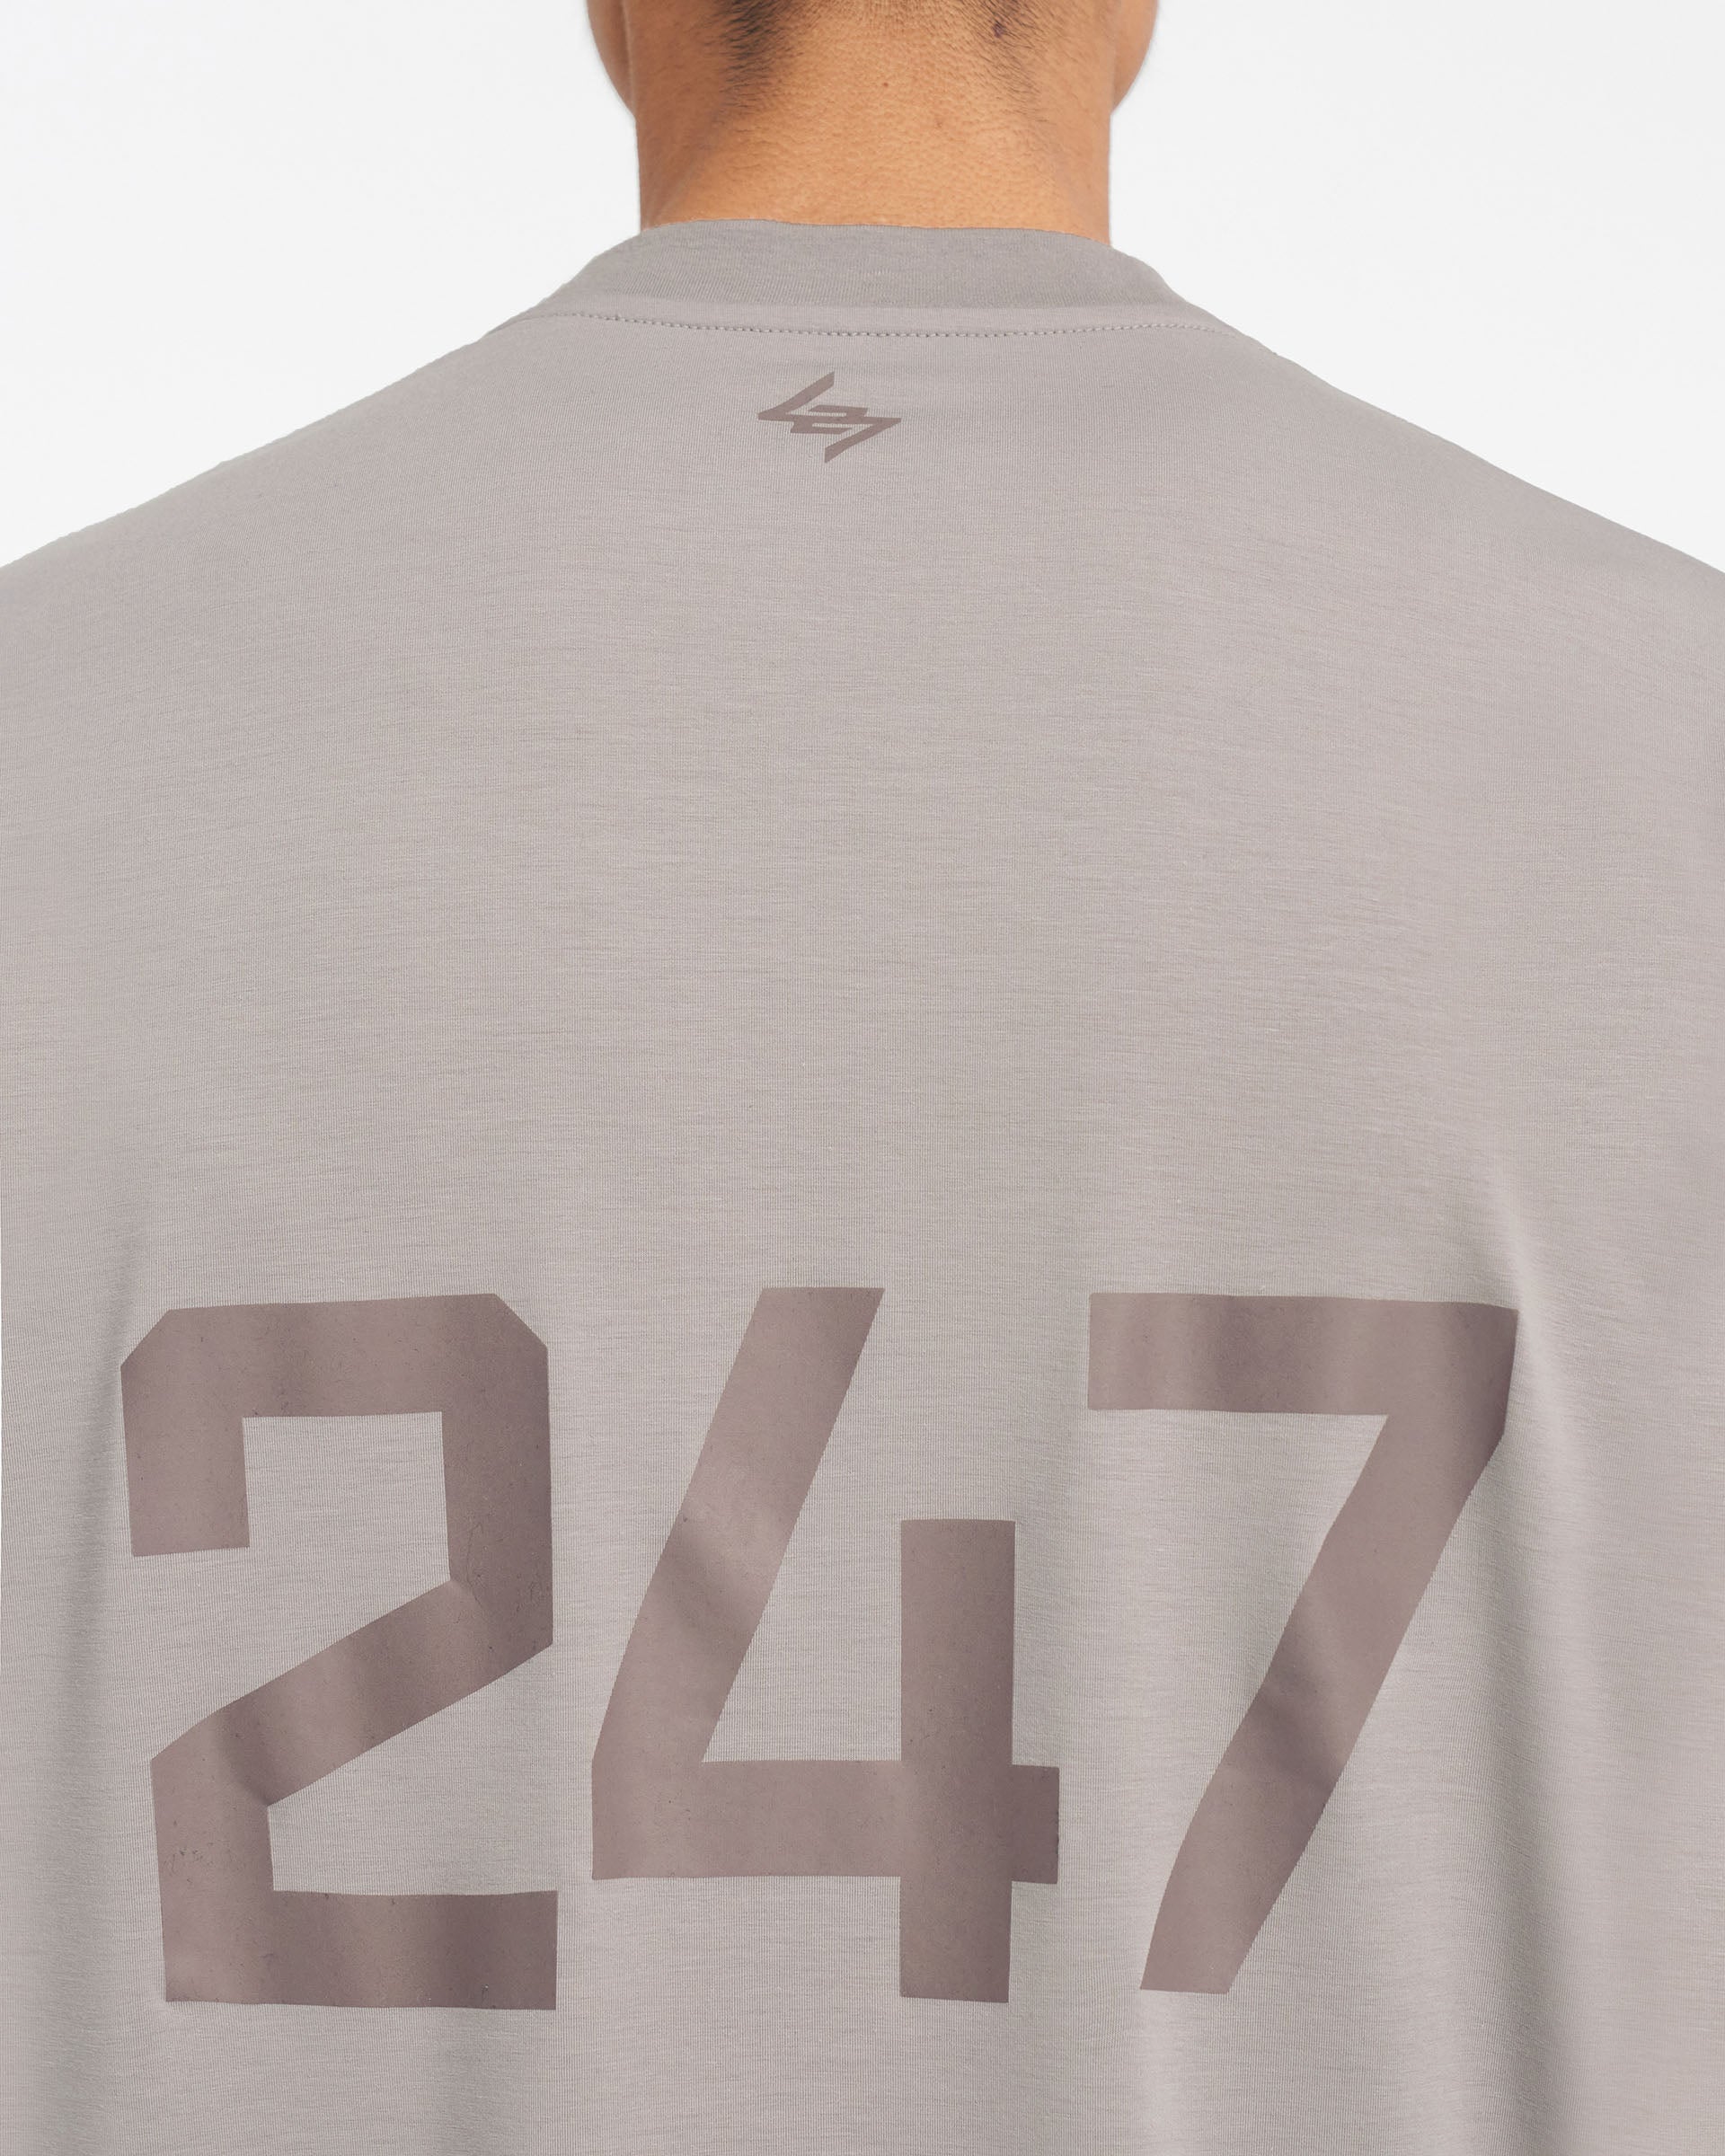 247 Oversized T-Shirt - Cinder